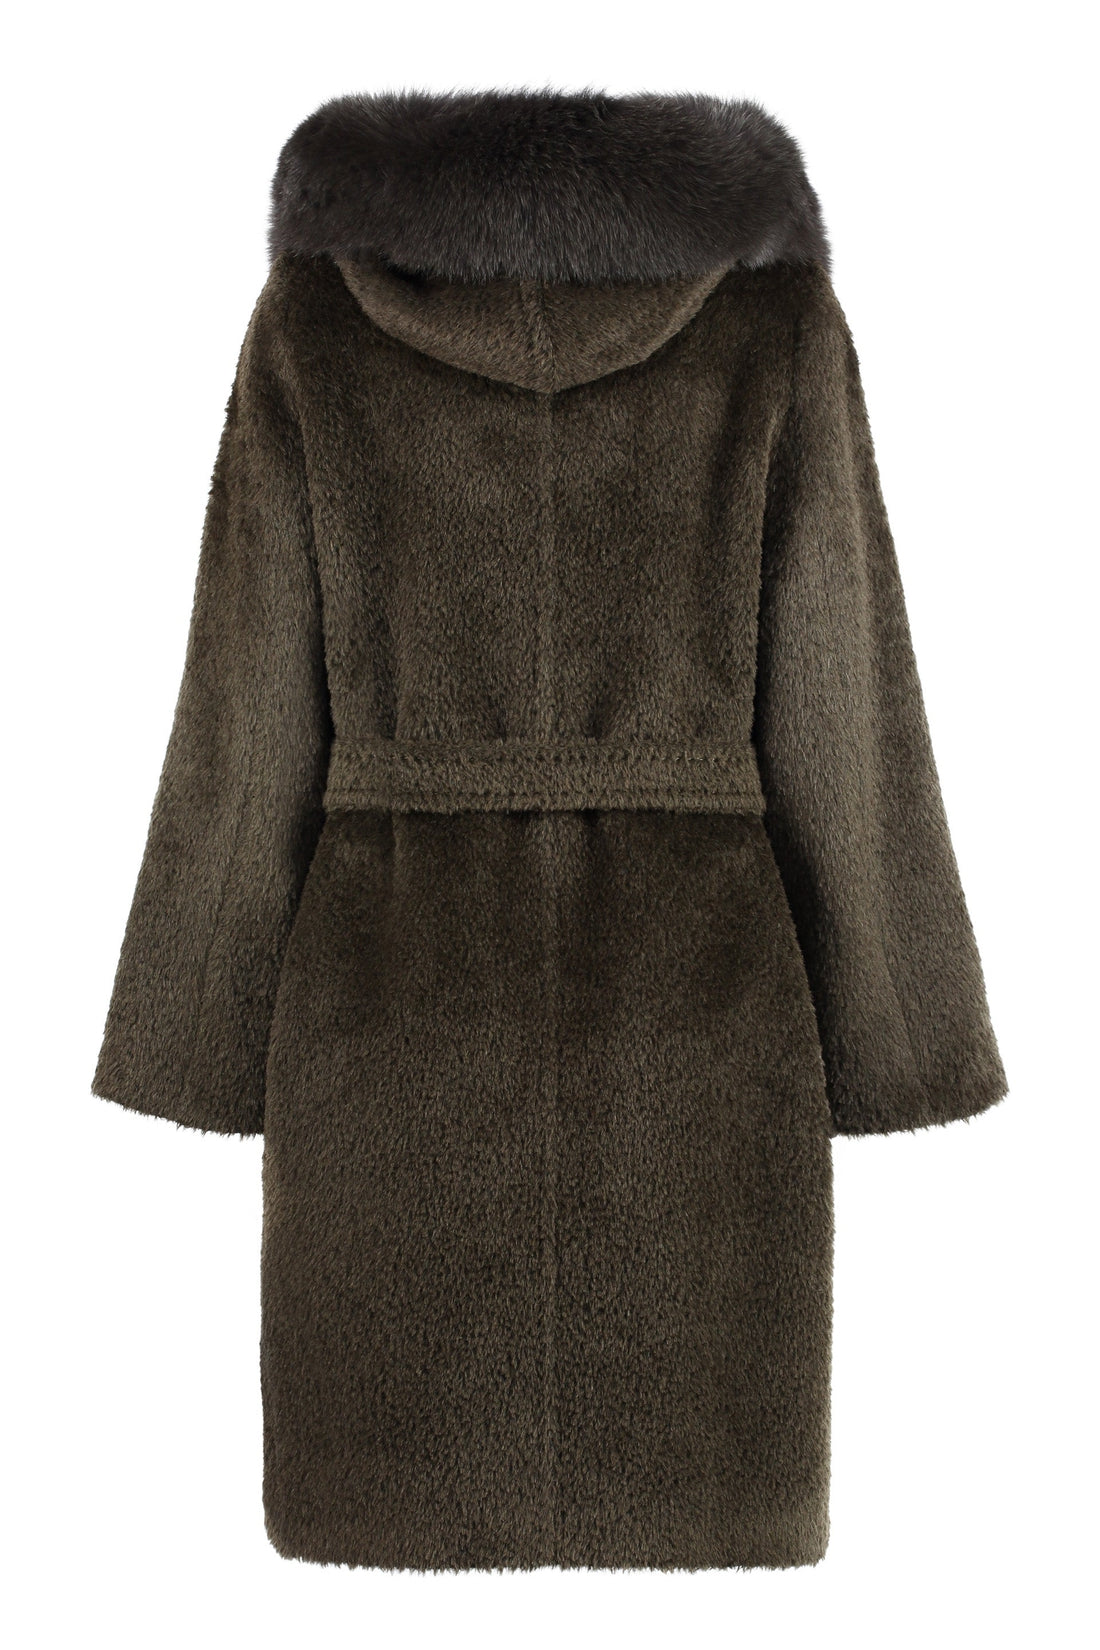 Max Mara Studio-OUTLET-SALE-Gessy hooded alpaca blend coat-ARCHIVIST